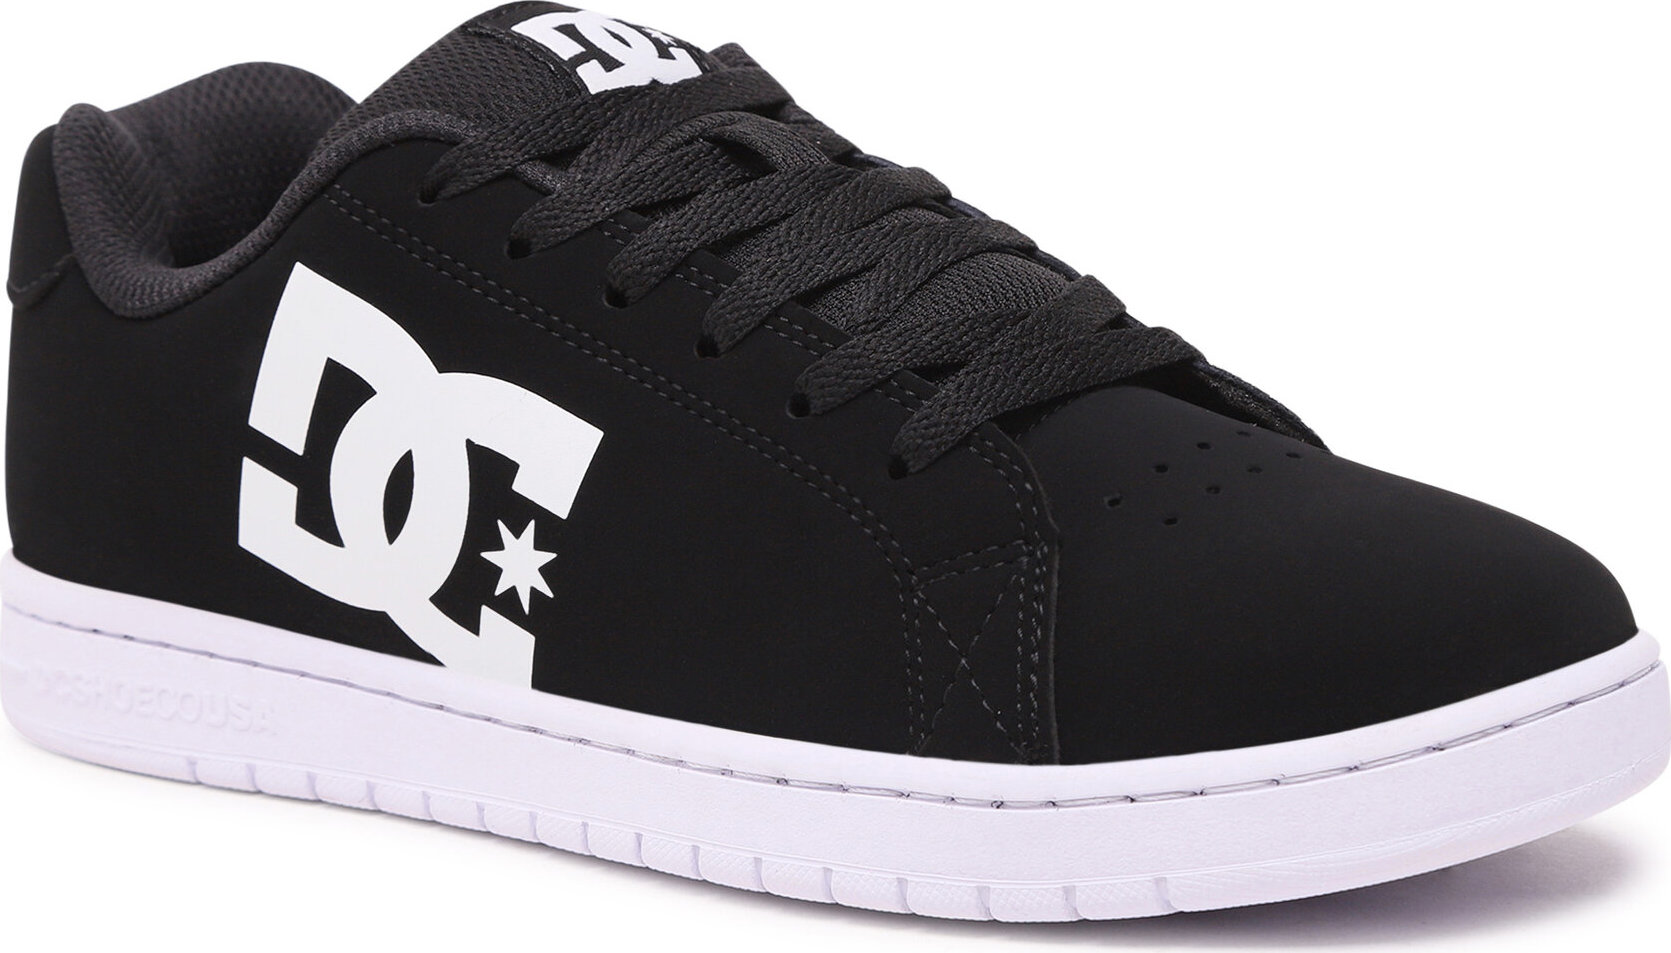 Sneakersy DC Gaveler ADYS100536 Black/White (BKW)